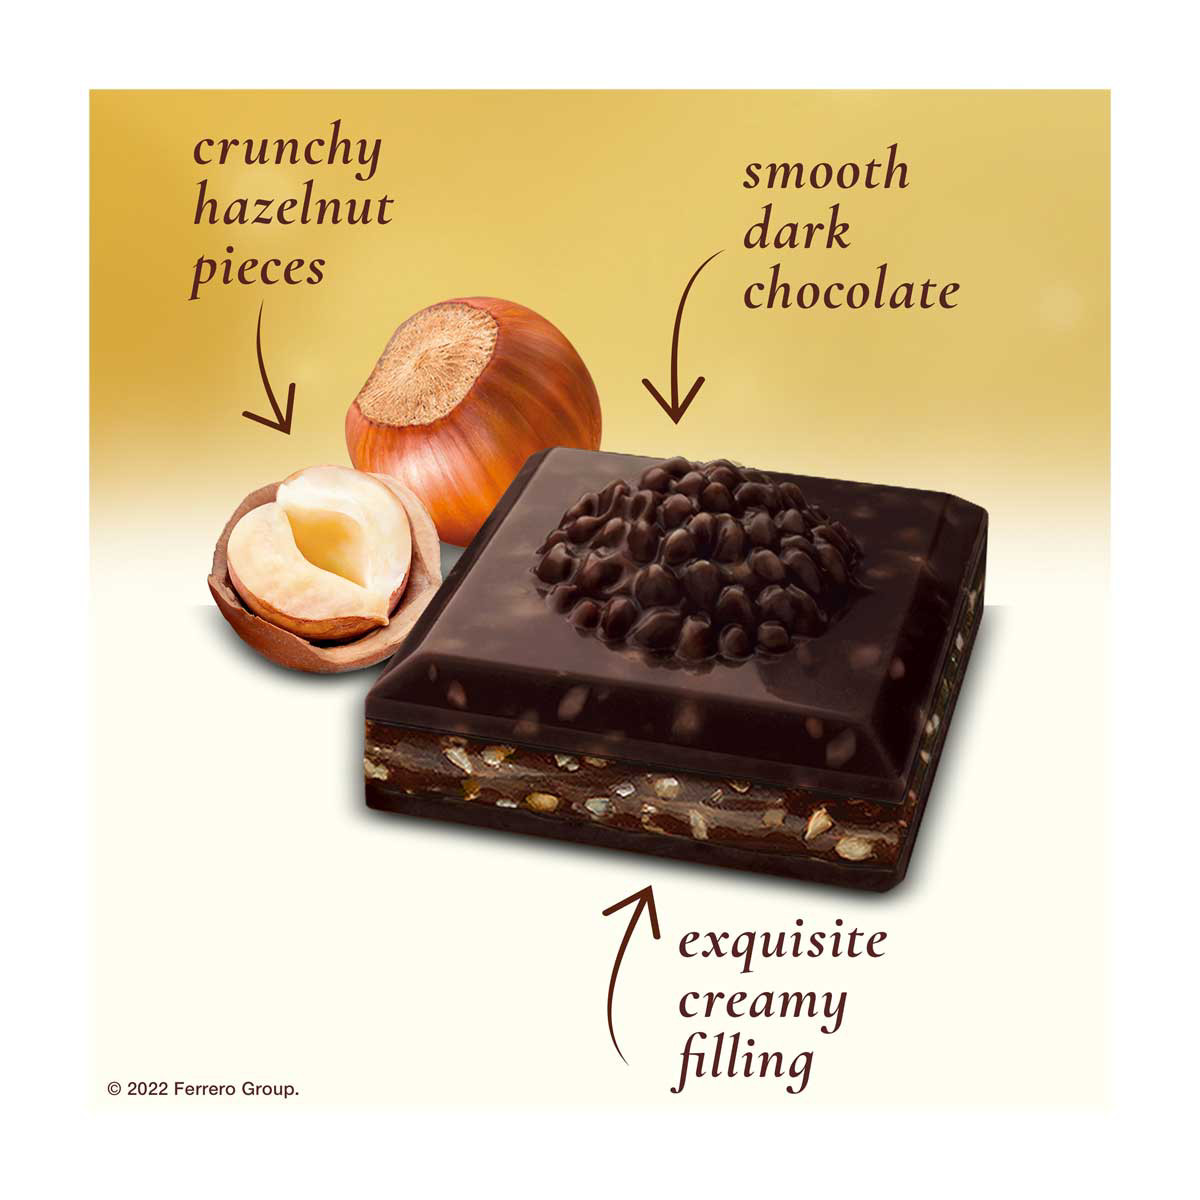 Ferrero Rocher Dark Chocolate Bar, 3.1 oz